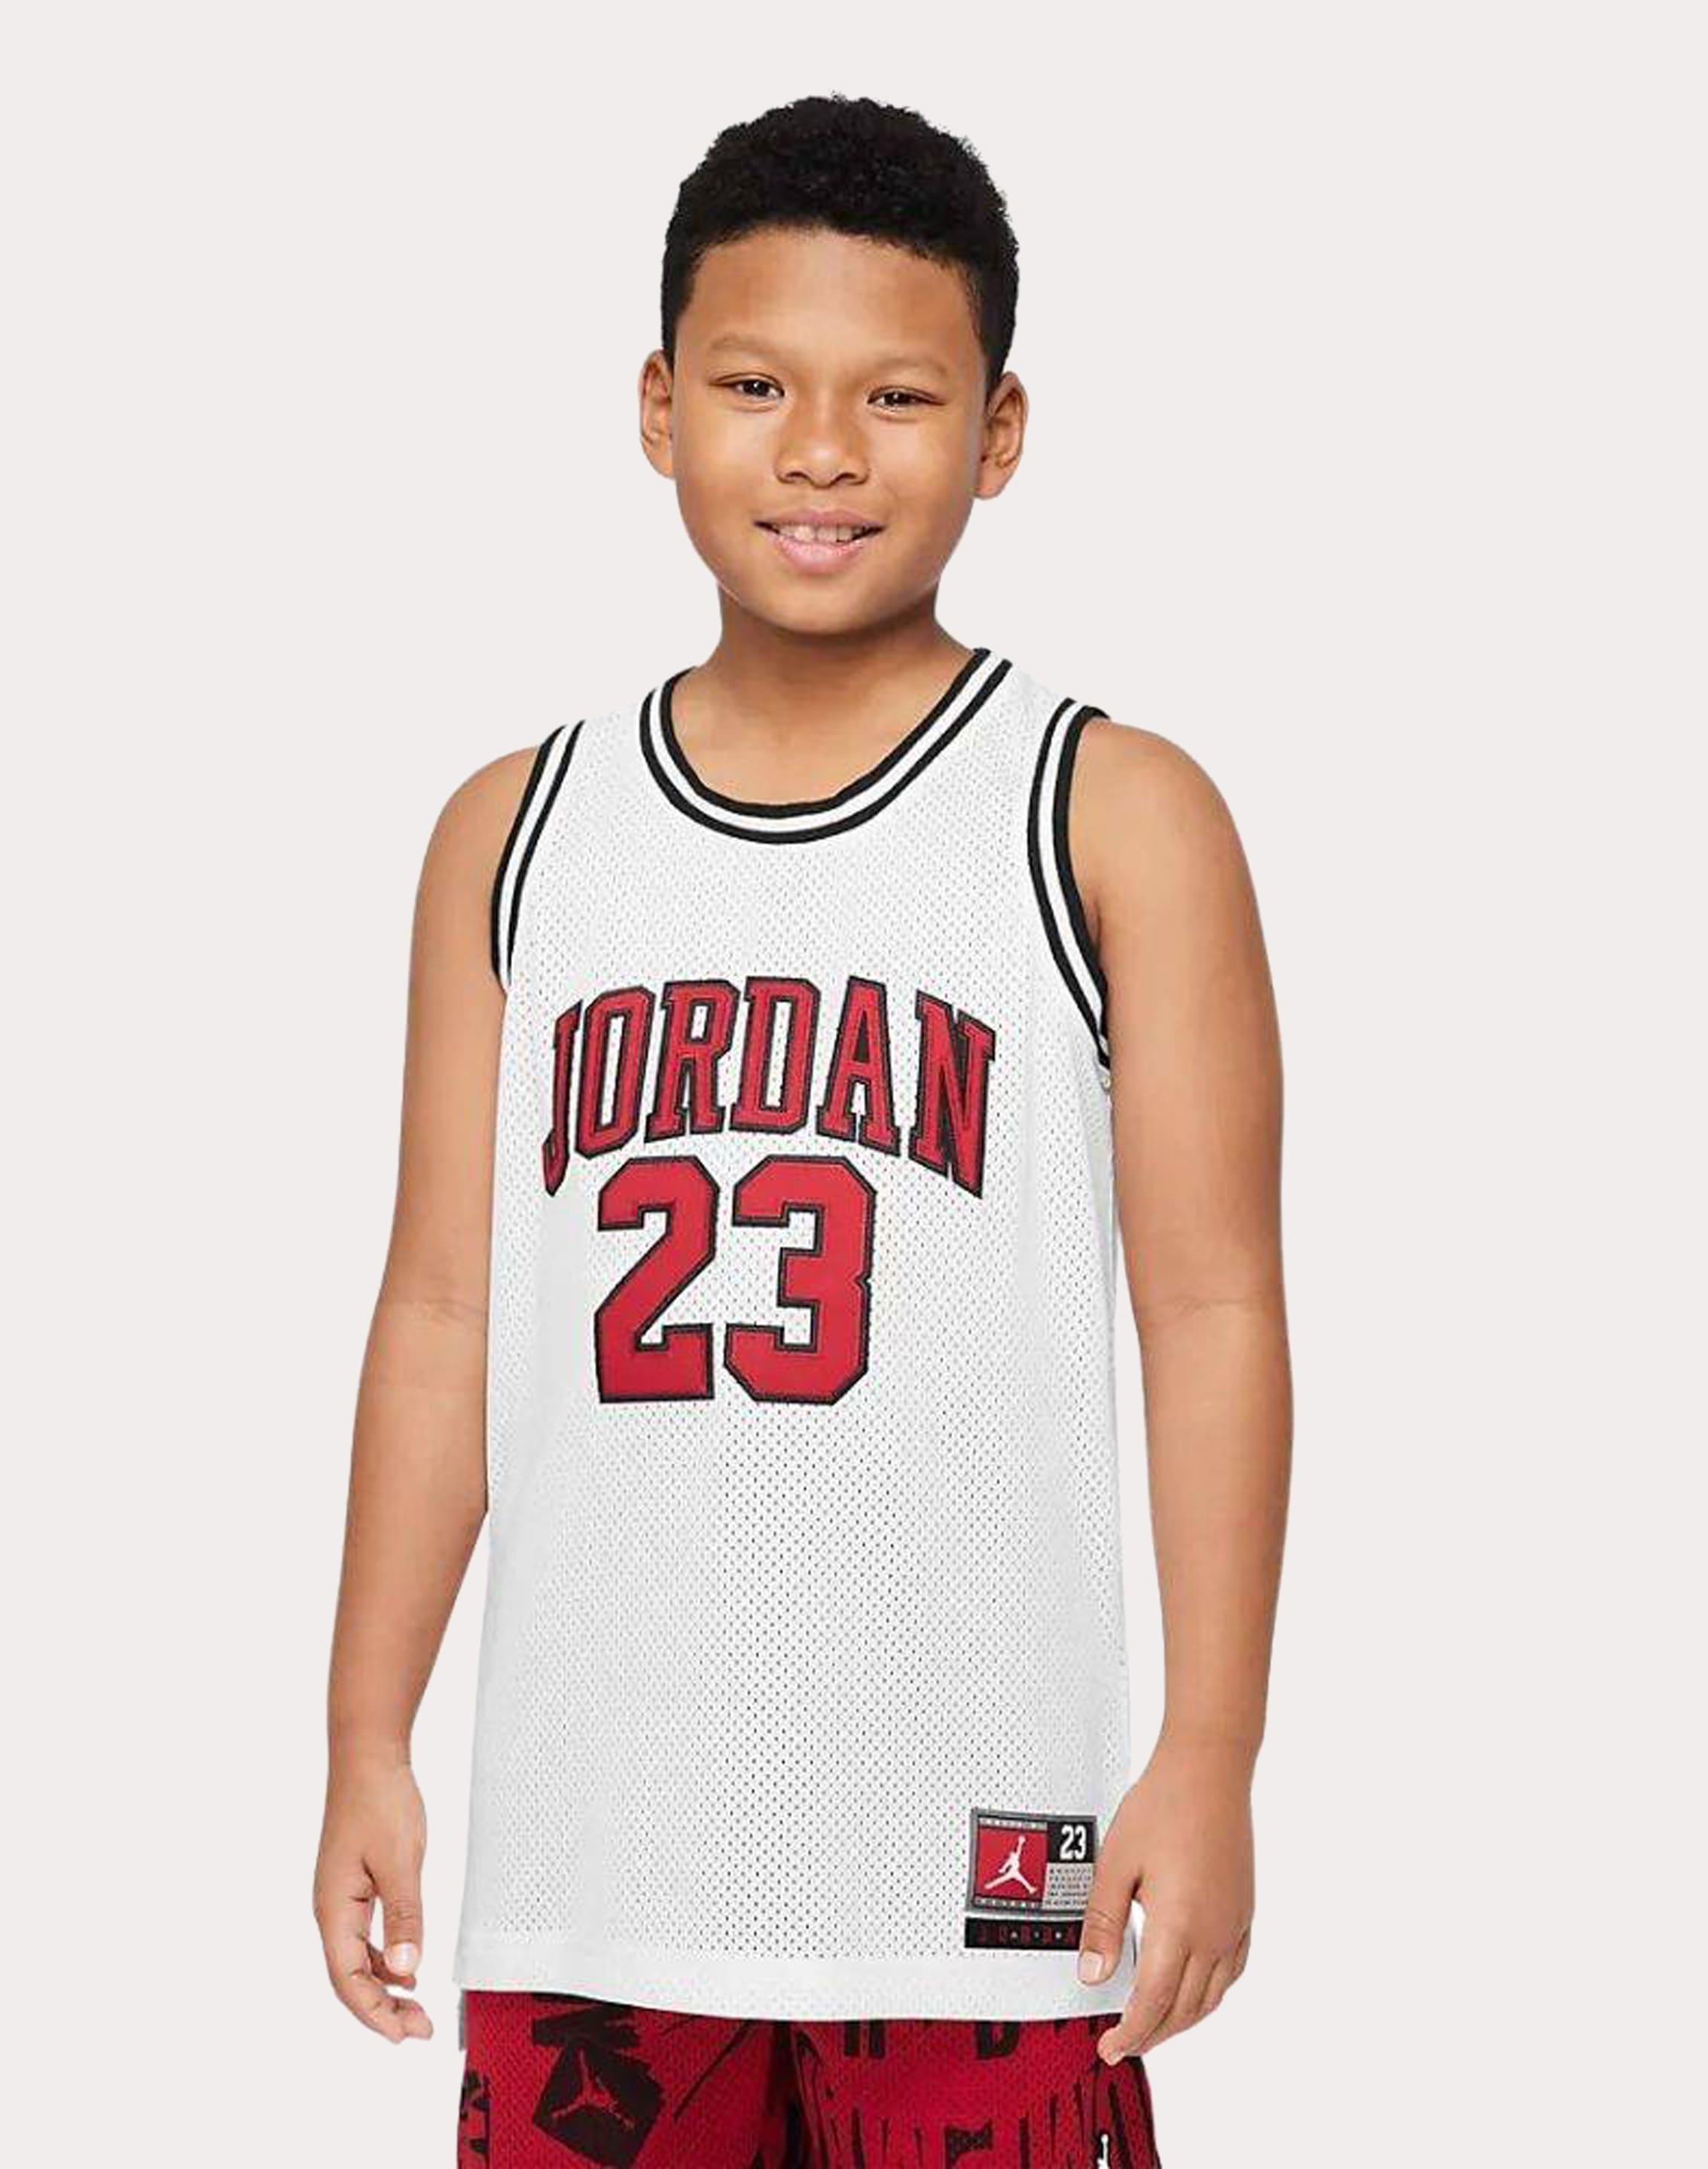 Jordan Kids' 23 Jersey